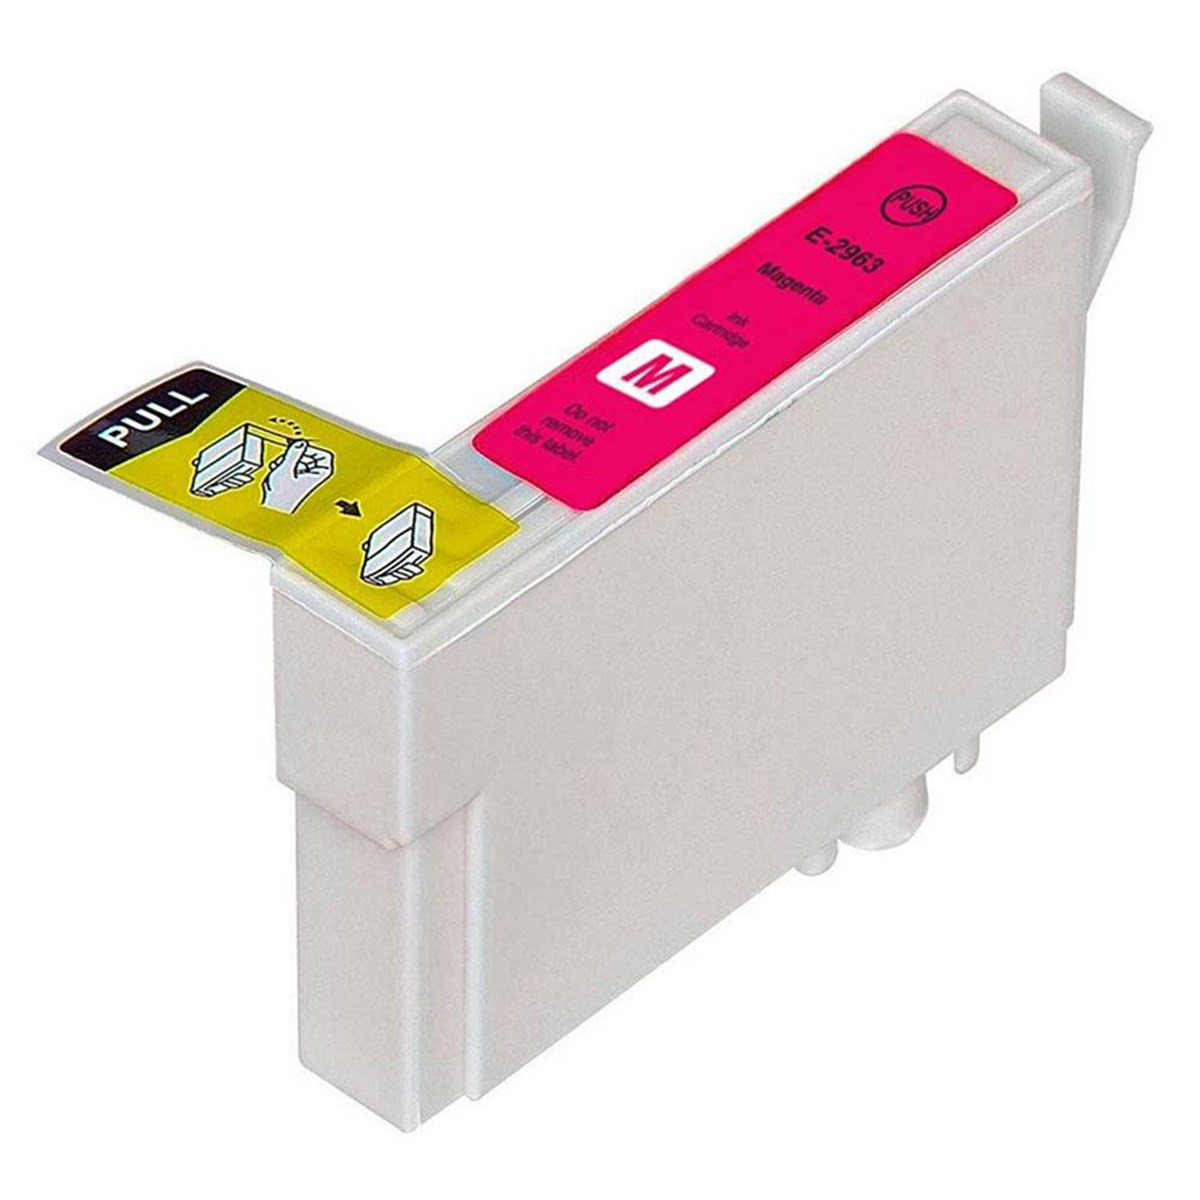 Cartucho de Tinta Compatível com Epson T296320 T296 Magenta | XP-441 XP-431 XP-241 | 13ml